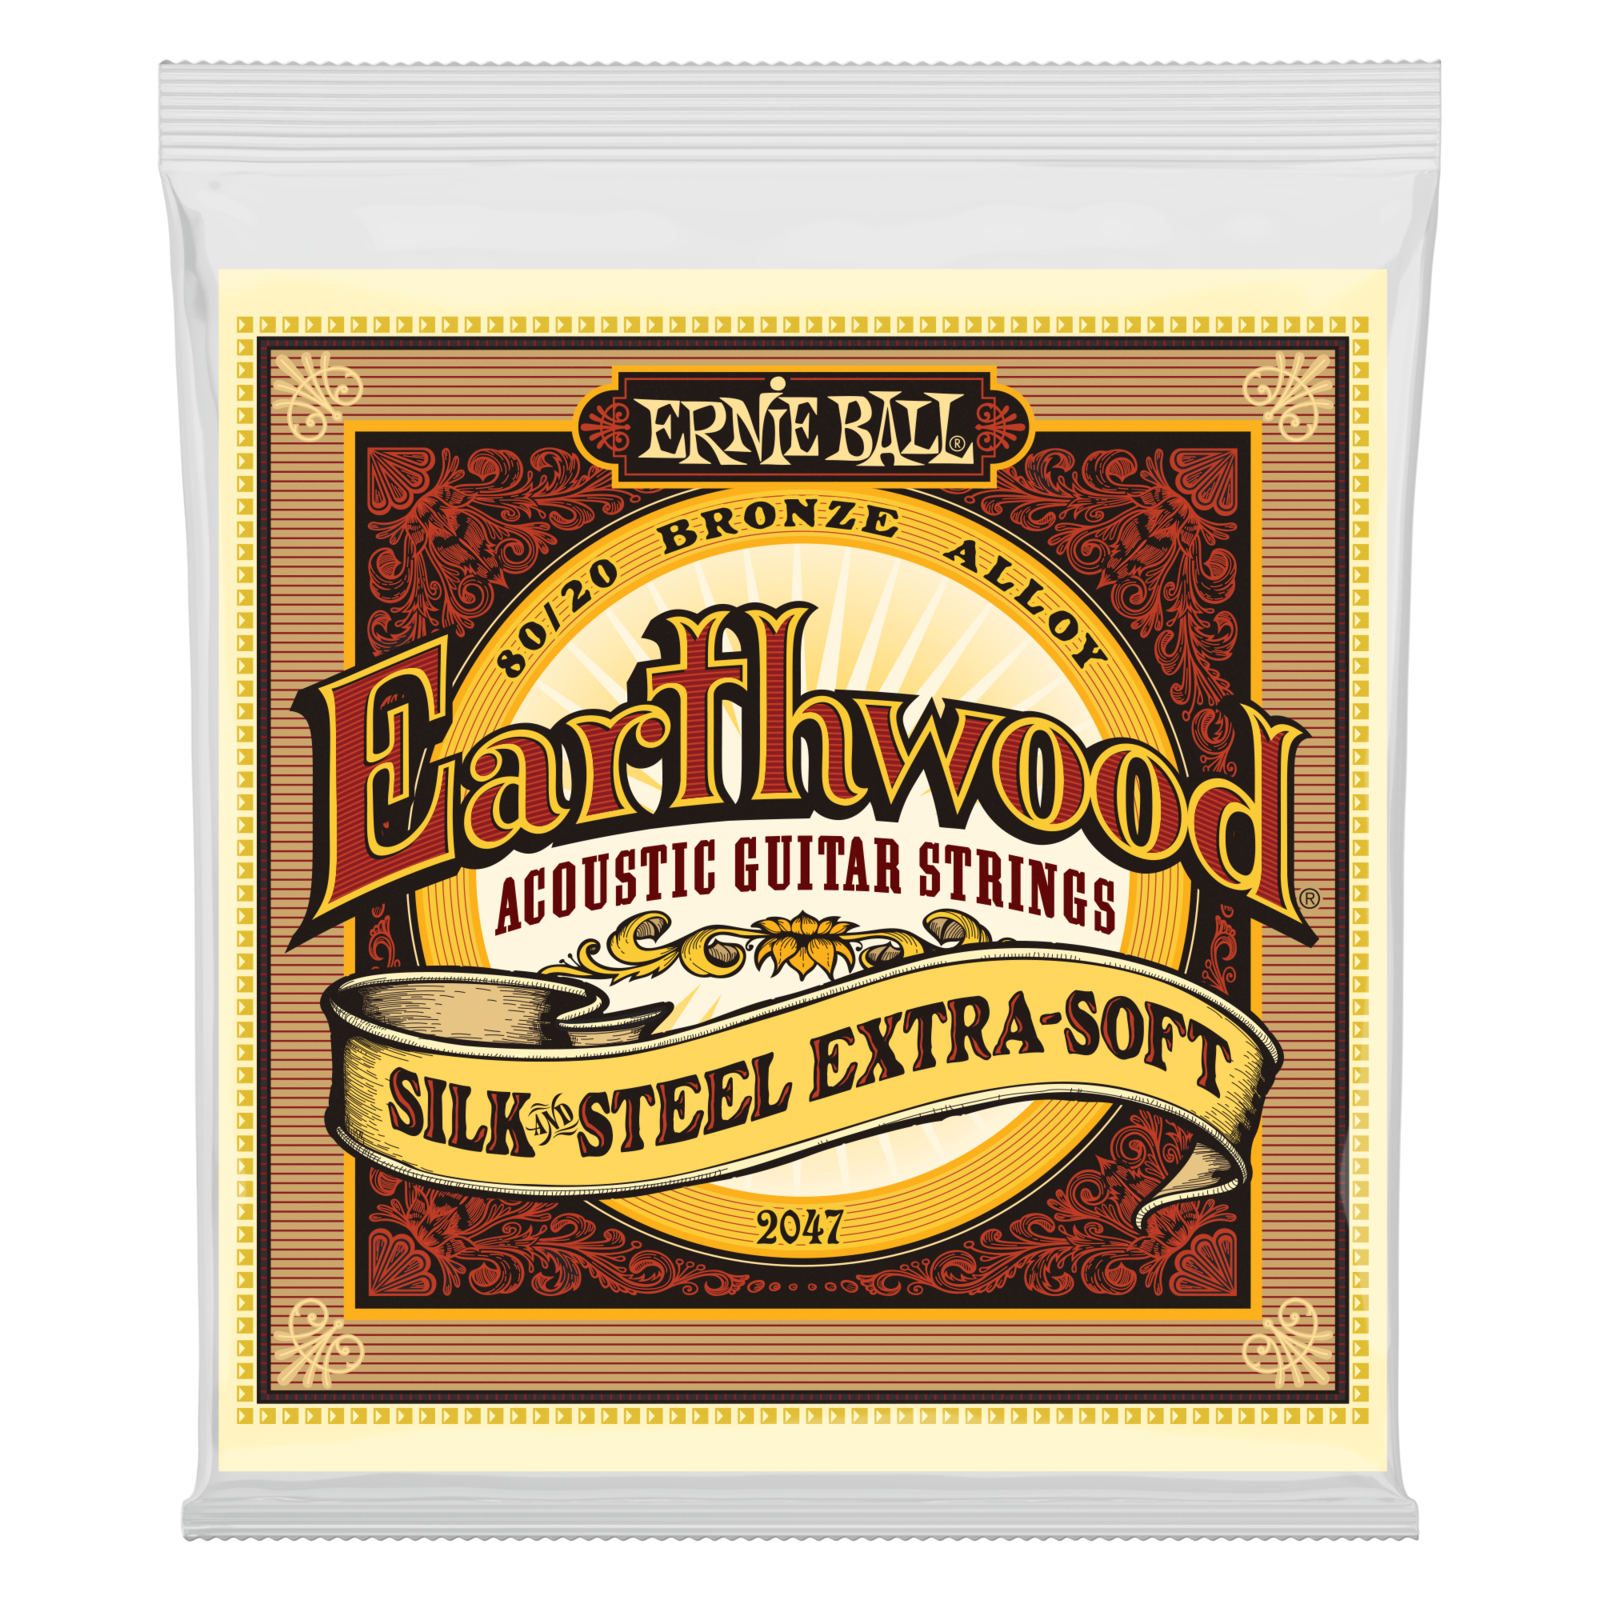 Struny pro akustickou kytaru Ernie Ball 2047 Earthwood Silk & Steel